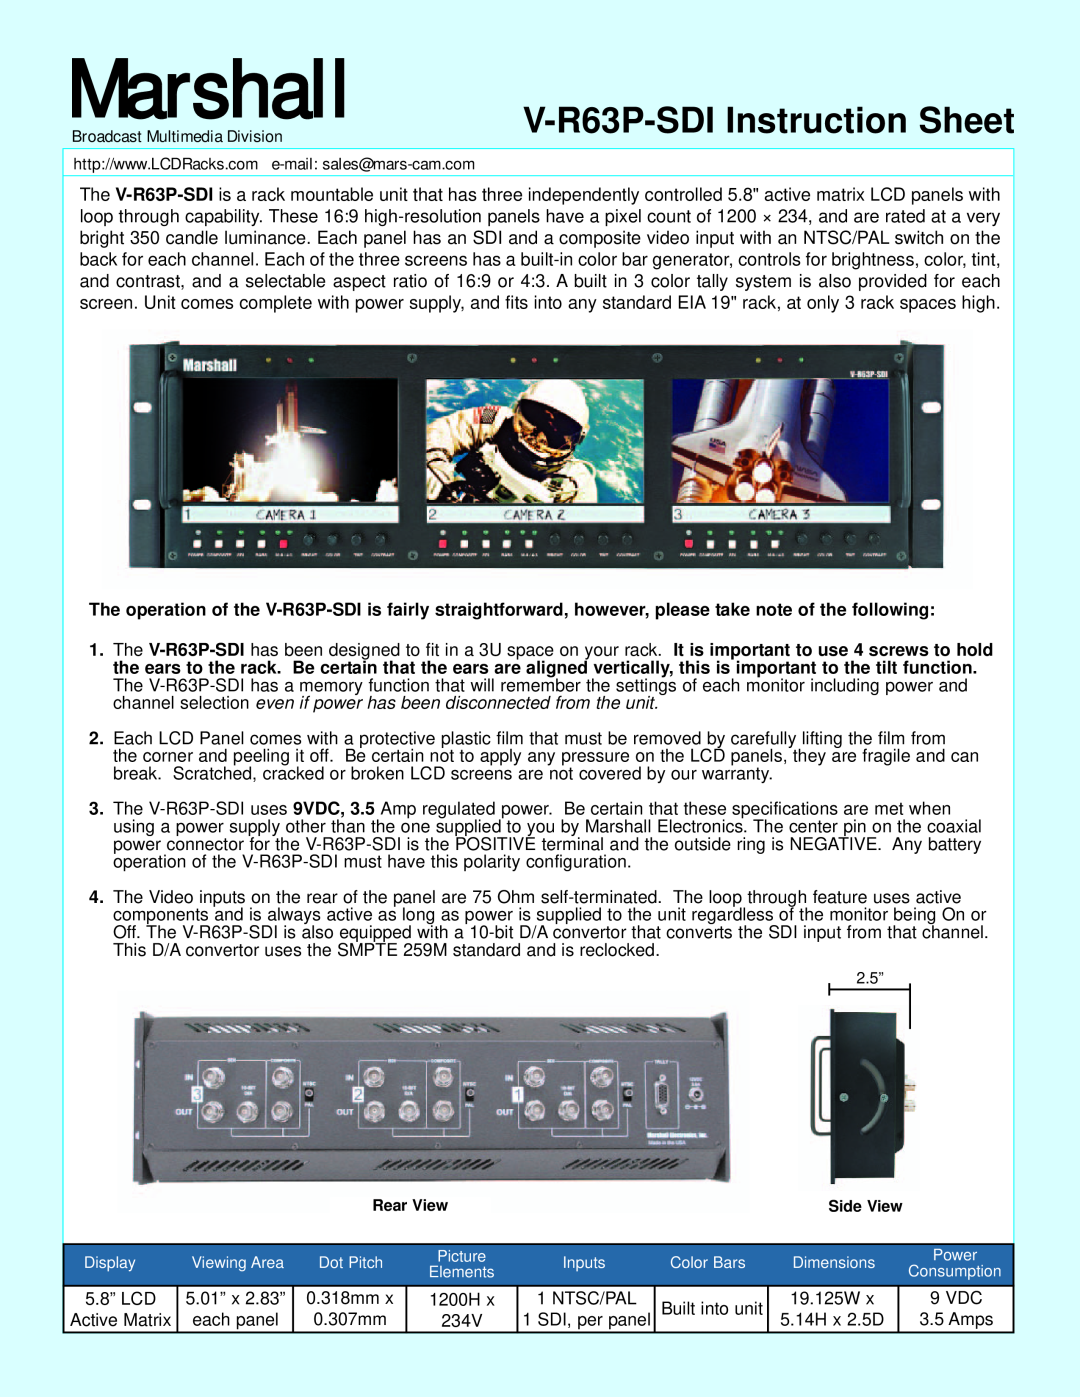 Marshall electronic instruction sheet Marshall, V-R63P-SDIInstruction Sheet, Broadcast Multimedia Division 